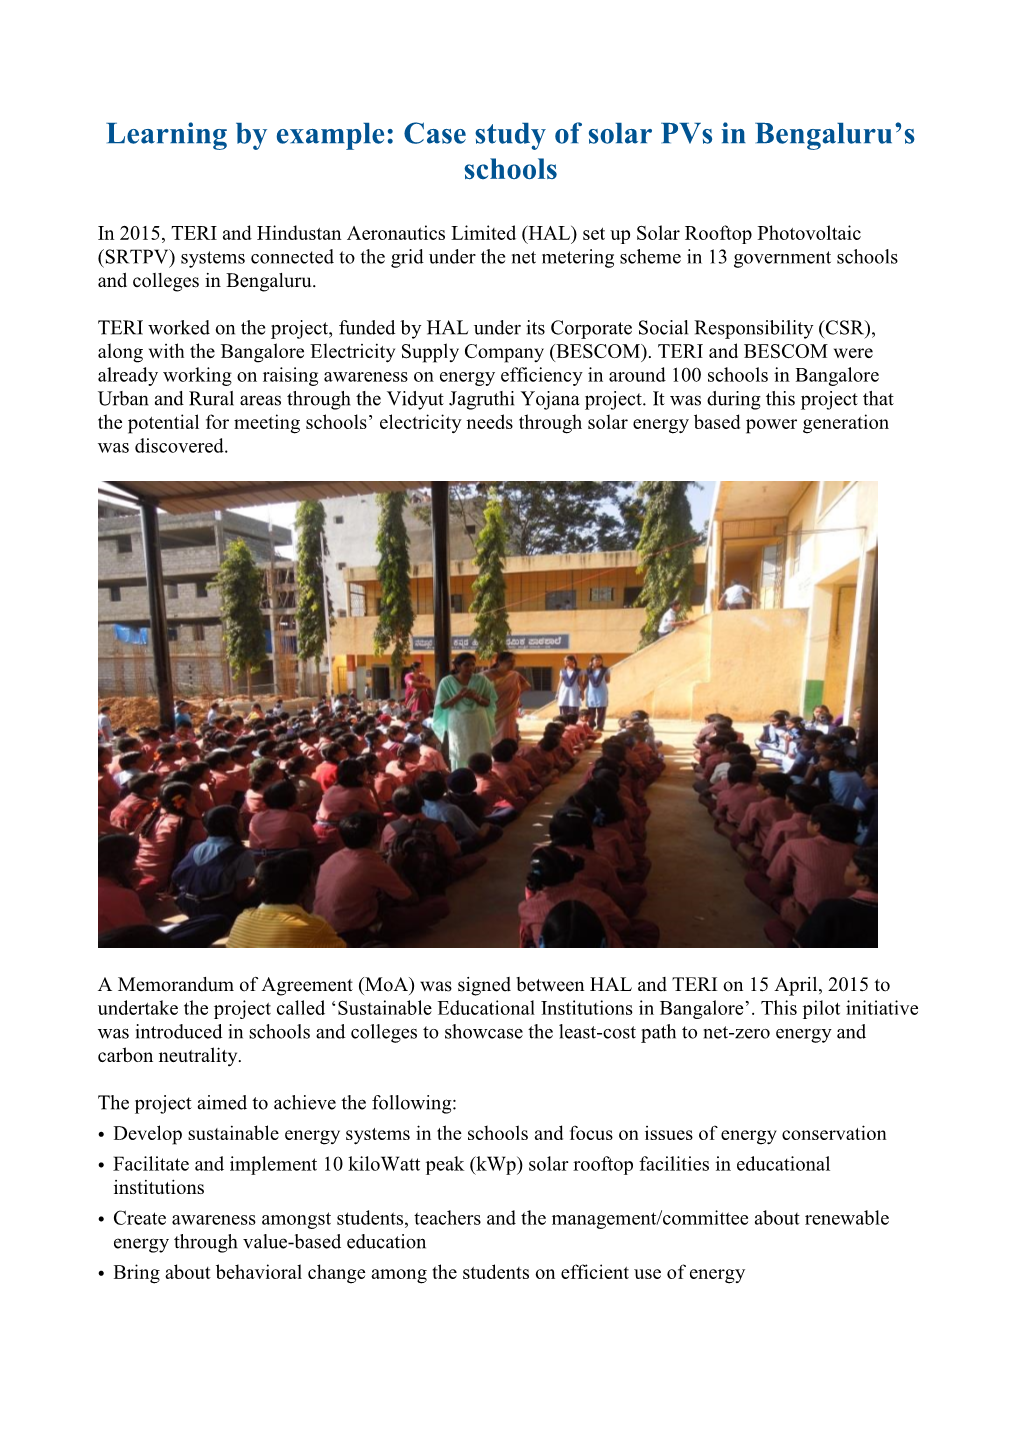 Case Study of Solar Pvs in Bengaluru's Schools